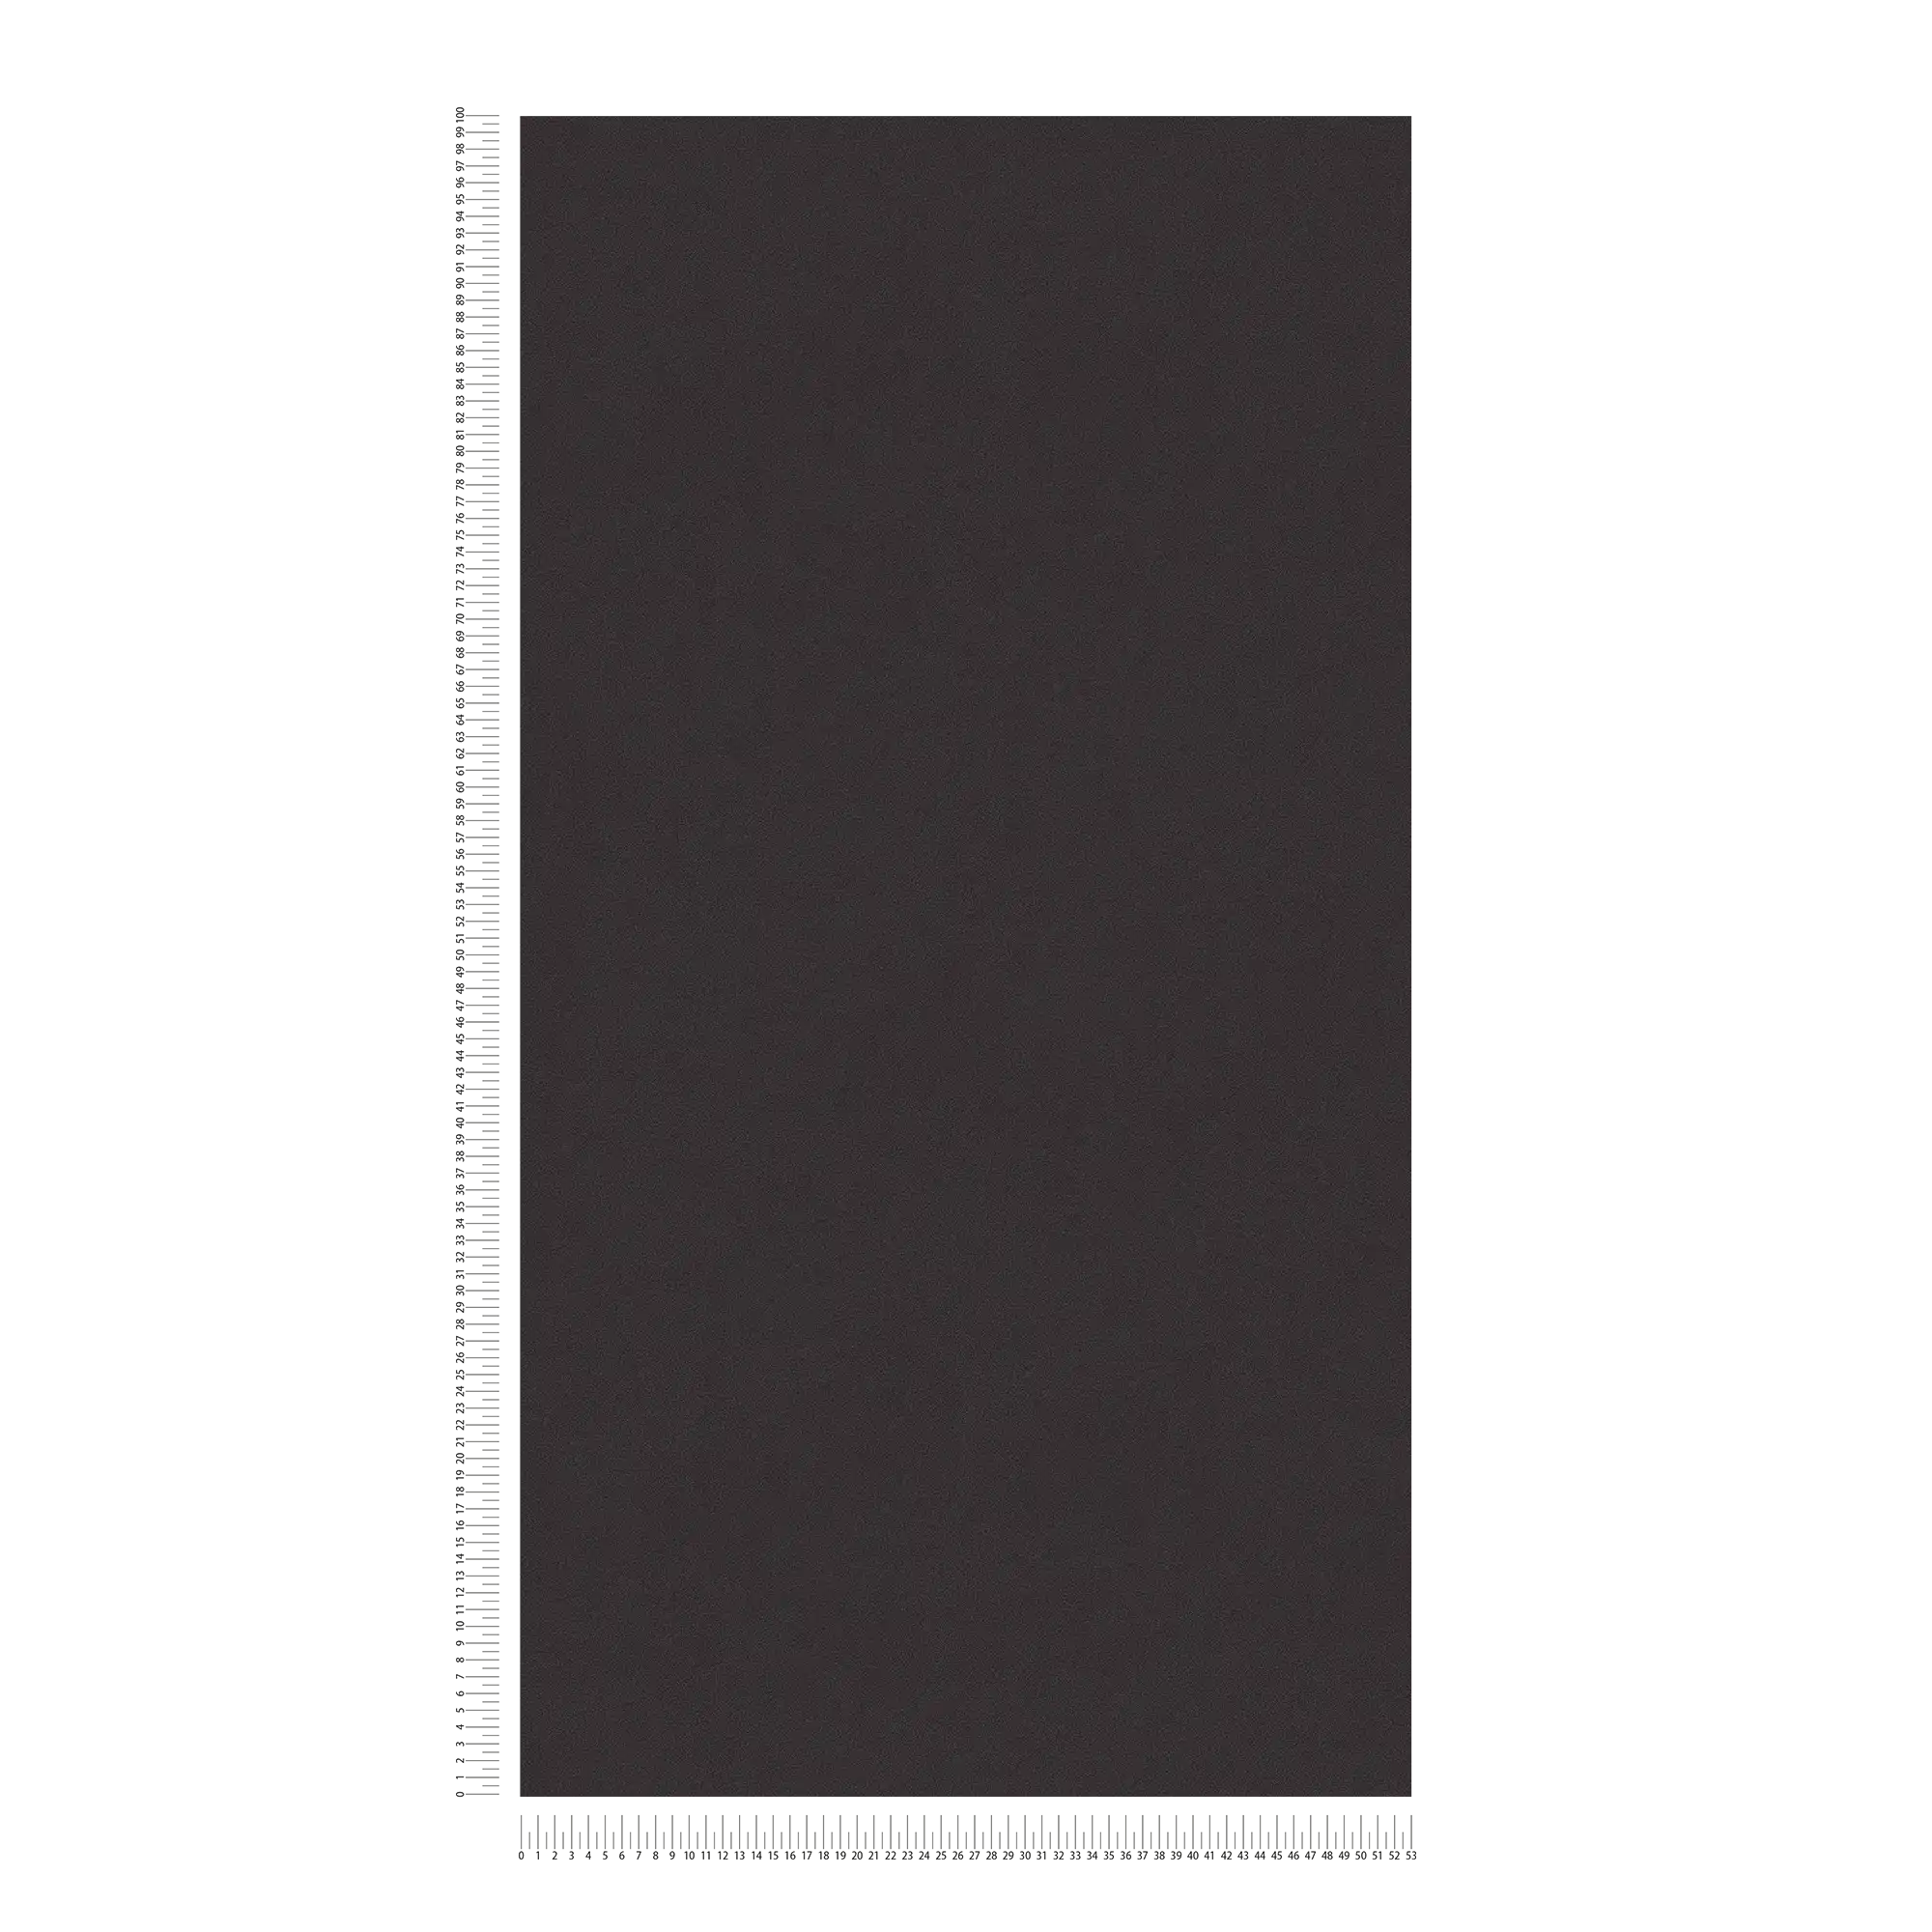             Papel pintado negro MICHALSKY con patrón de estructura forrada
        